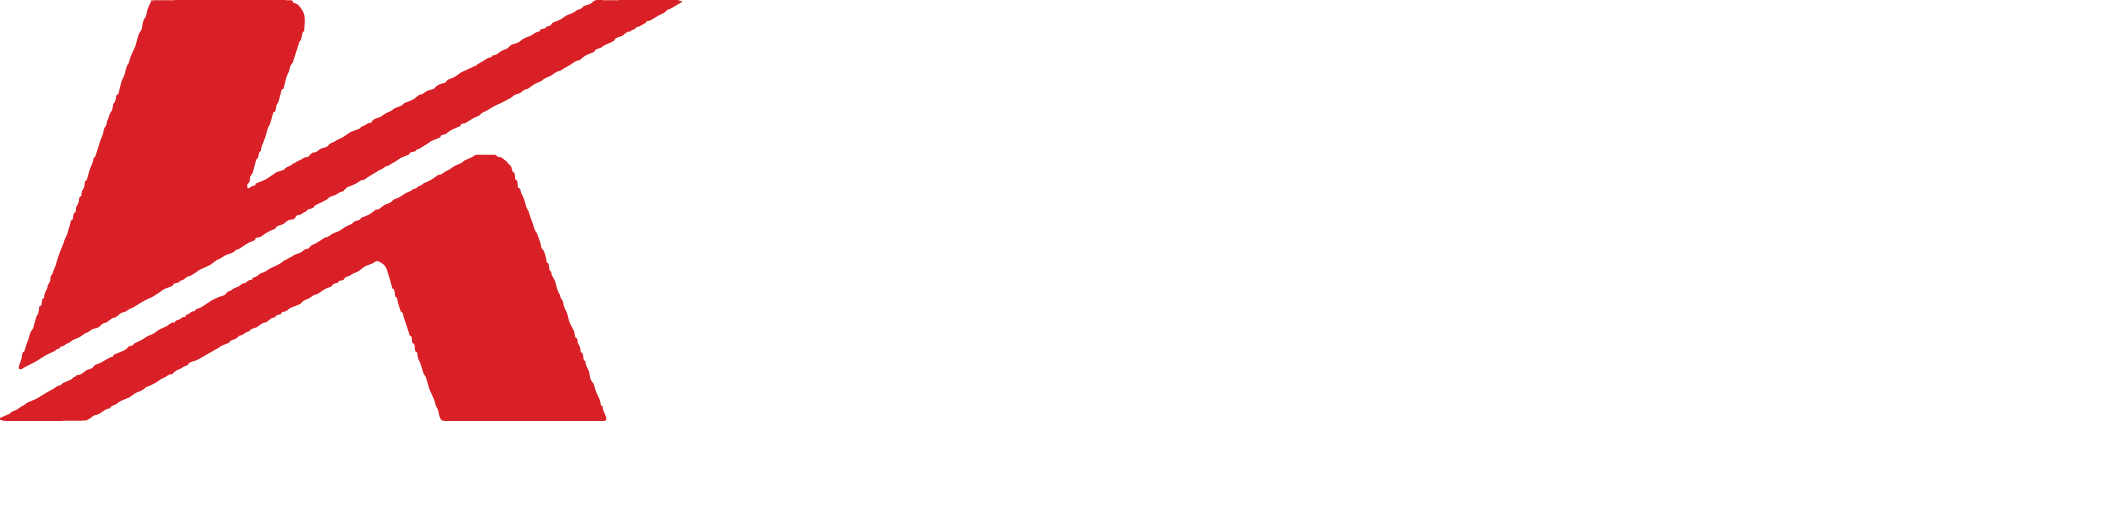 Kenda Tires footer logo